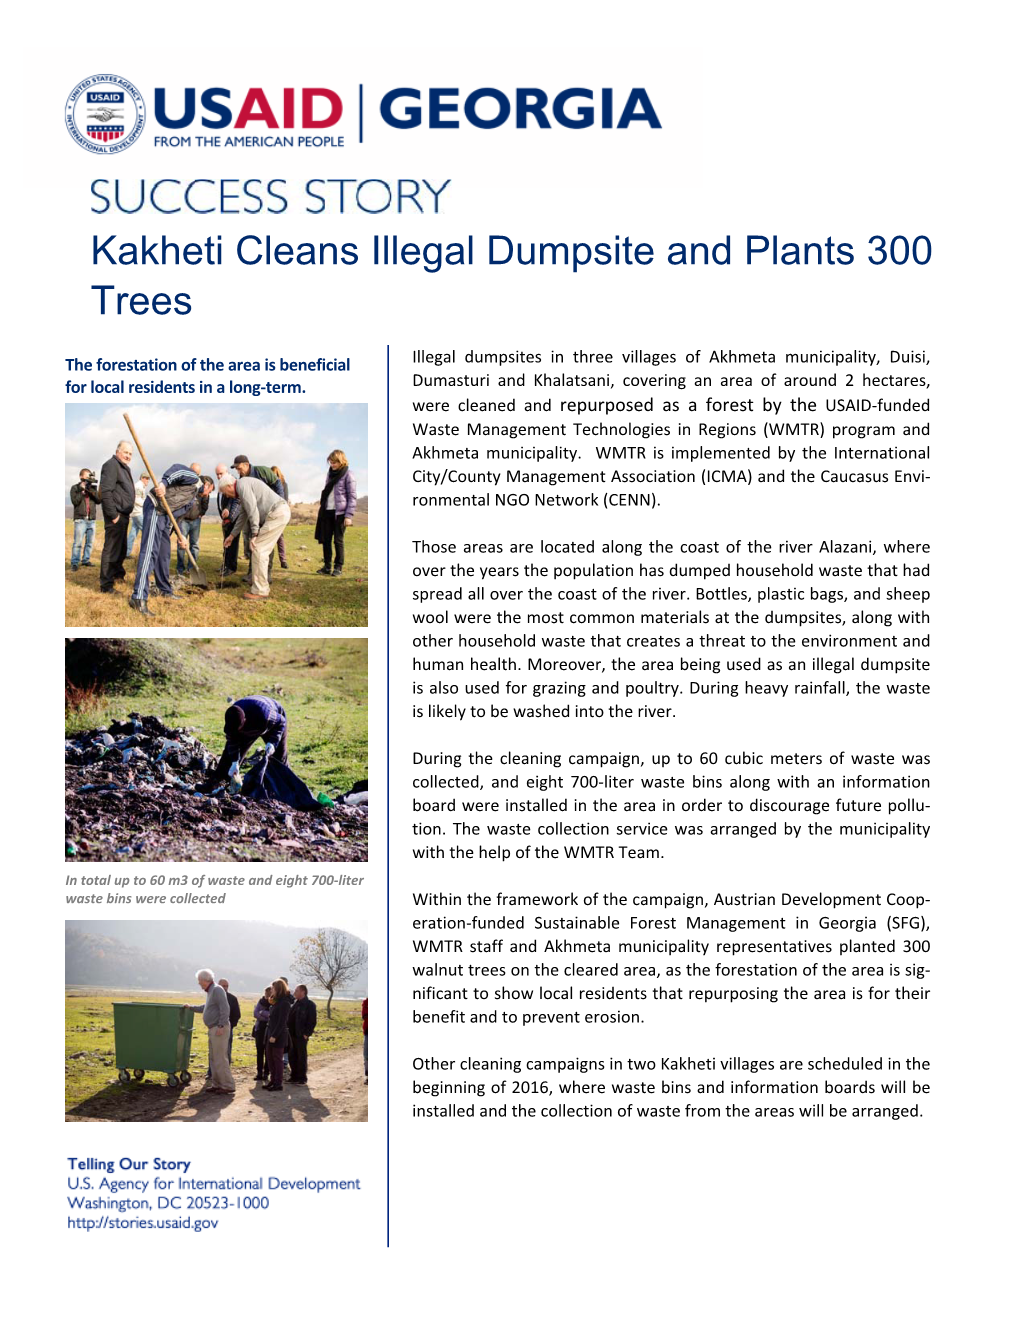 Kakheti Cleans Illegal Dumpsite and Plants 300 Trees